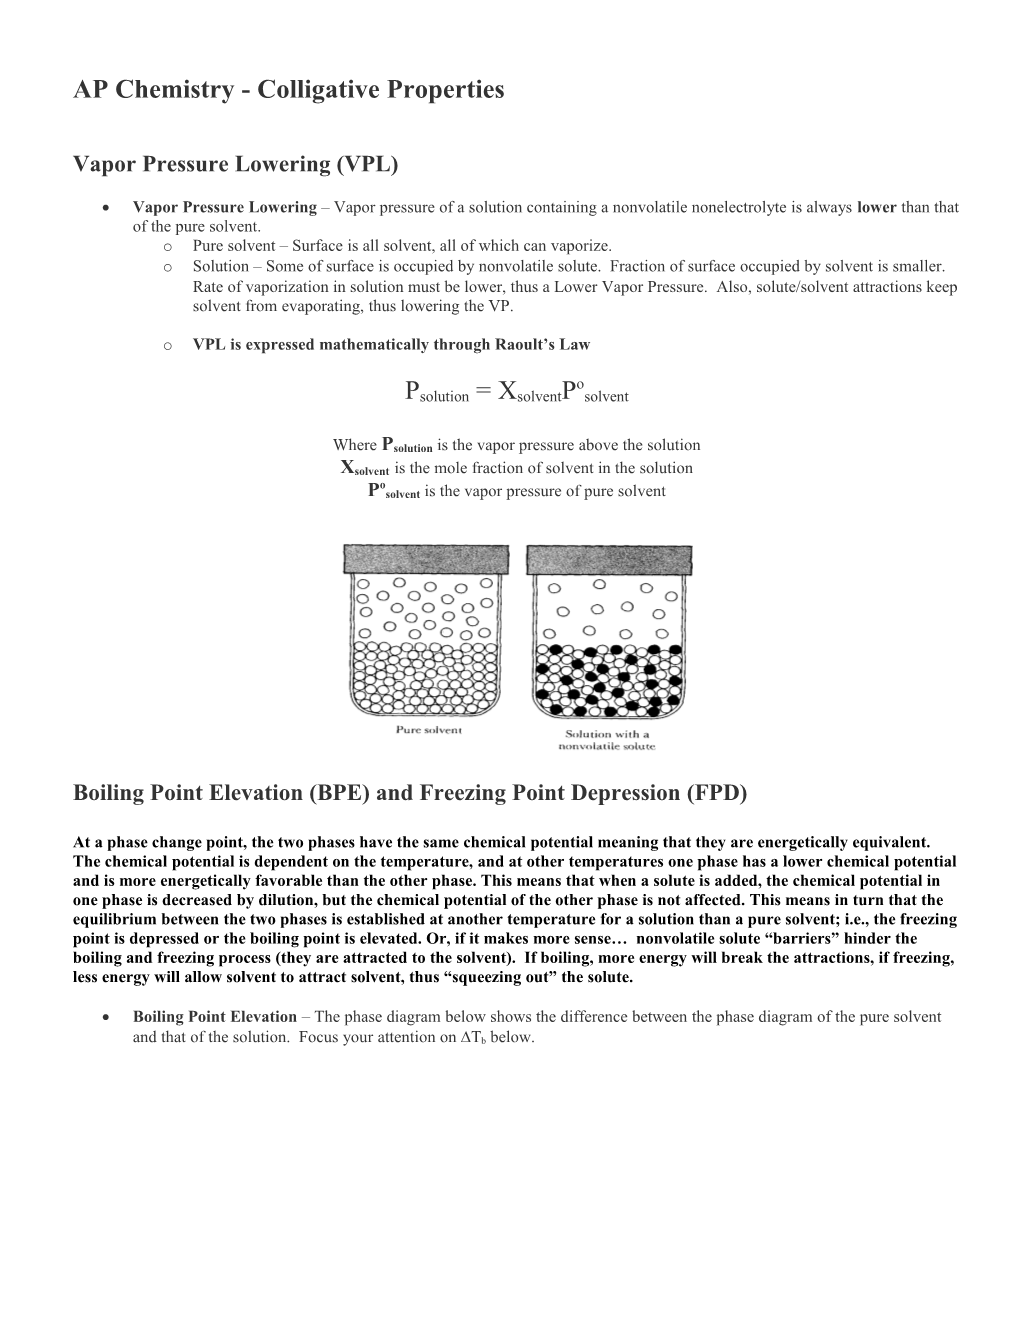 AP Chemistry - Colligative Property Diagrams